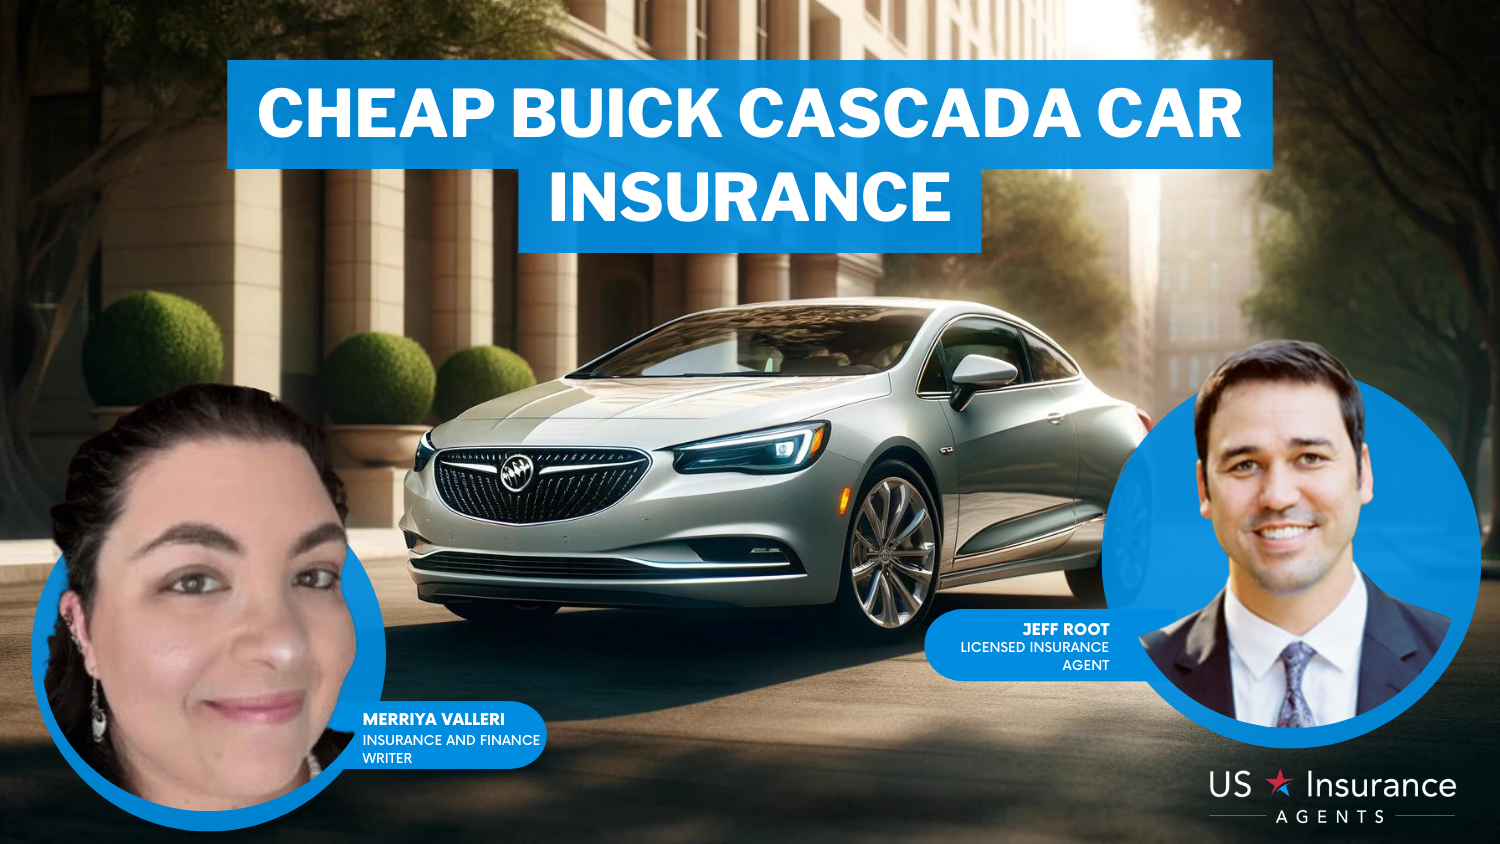 Cheap Buick Cascada Car Insurance: Erie, State Farm, and Travelers